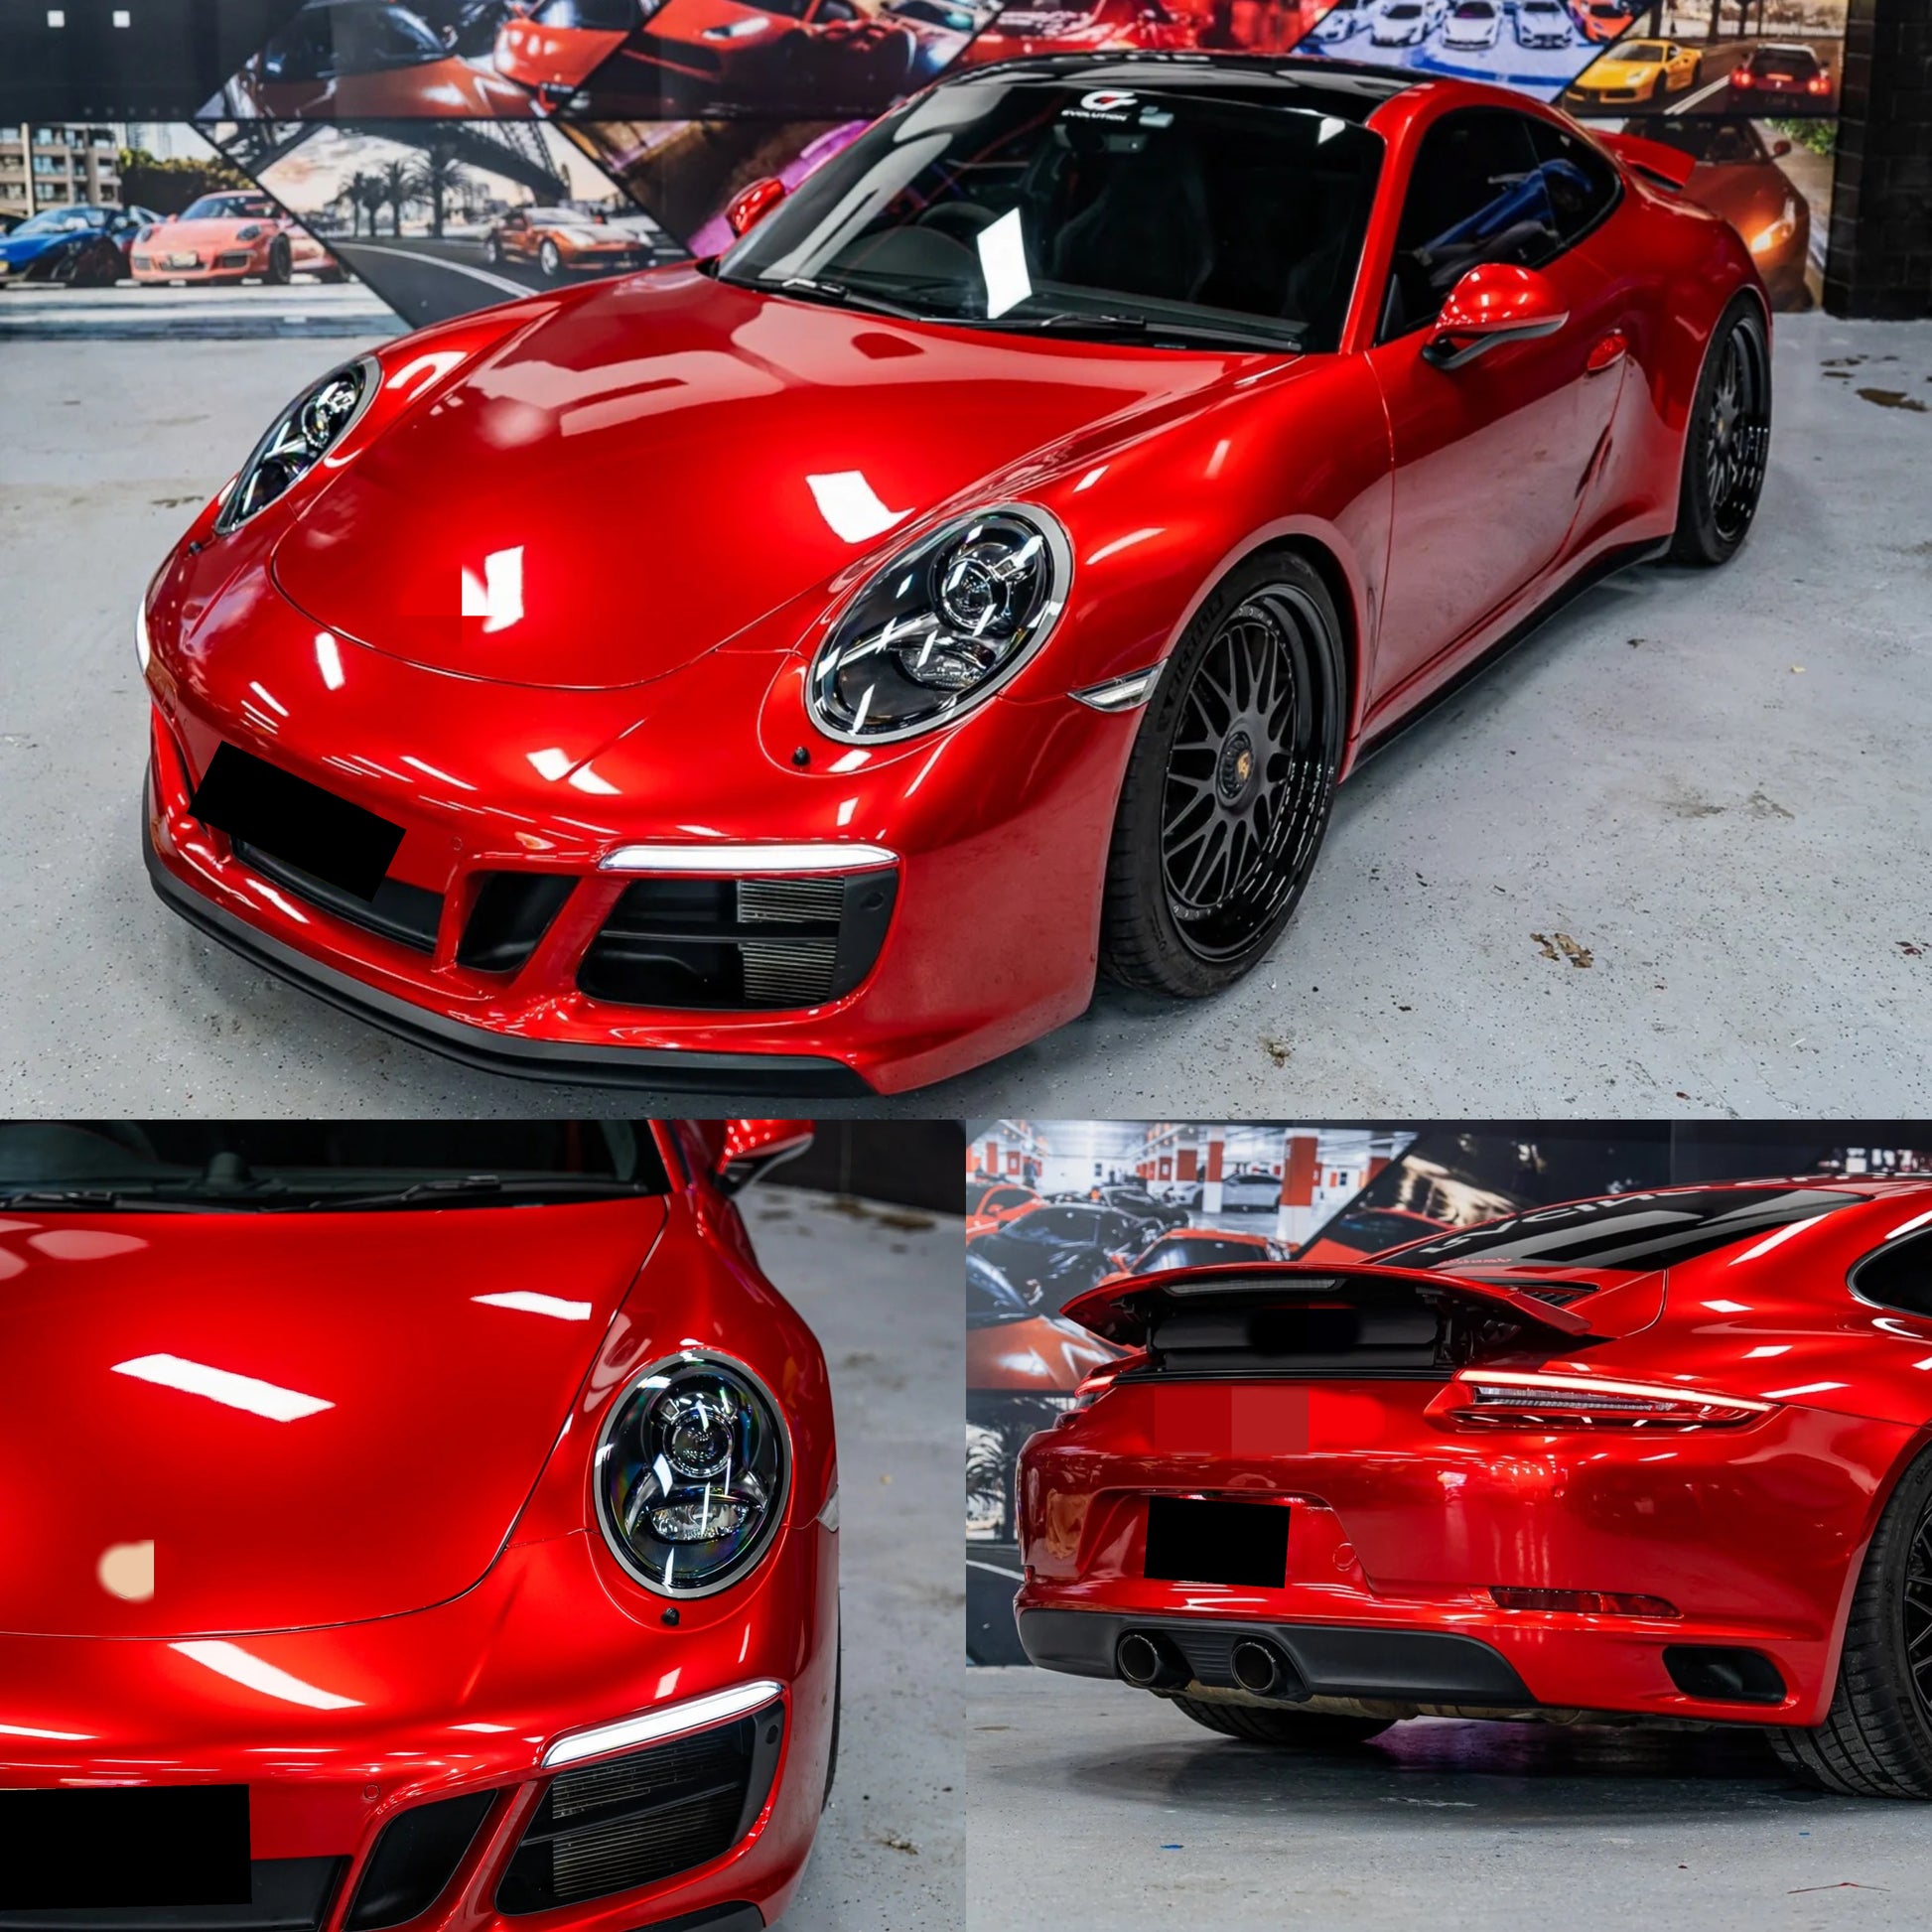 Glossy Metallic Vampire Red Car Wrap – vinylfrog